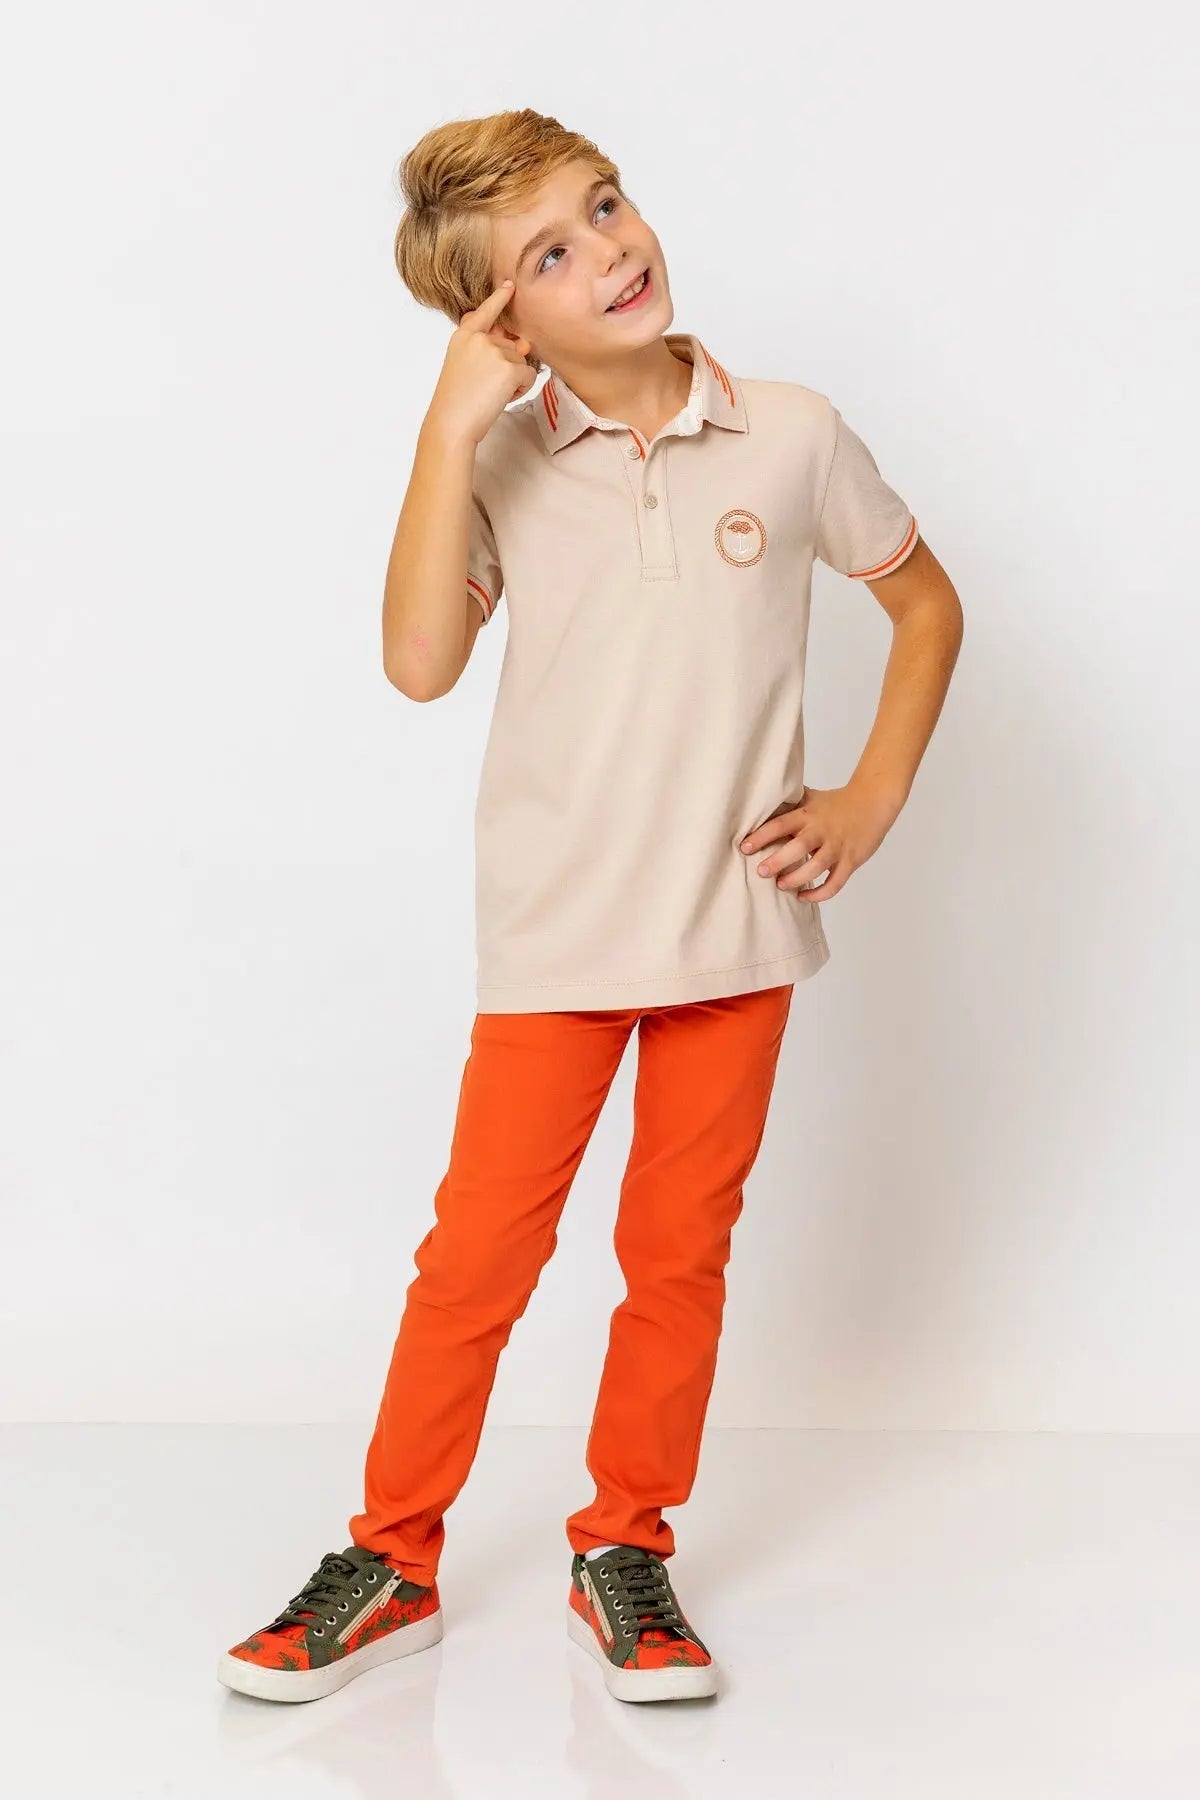 InCity Kids Boys Collared Short Sleeve Fashion Polo Shirt InCity Boys & Girls